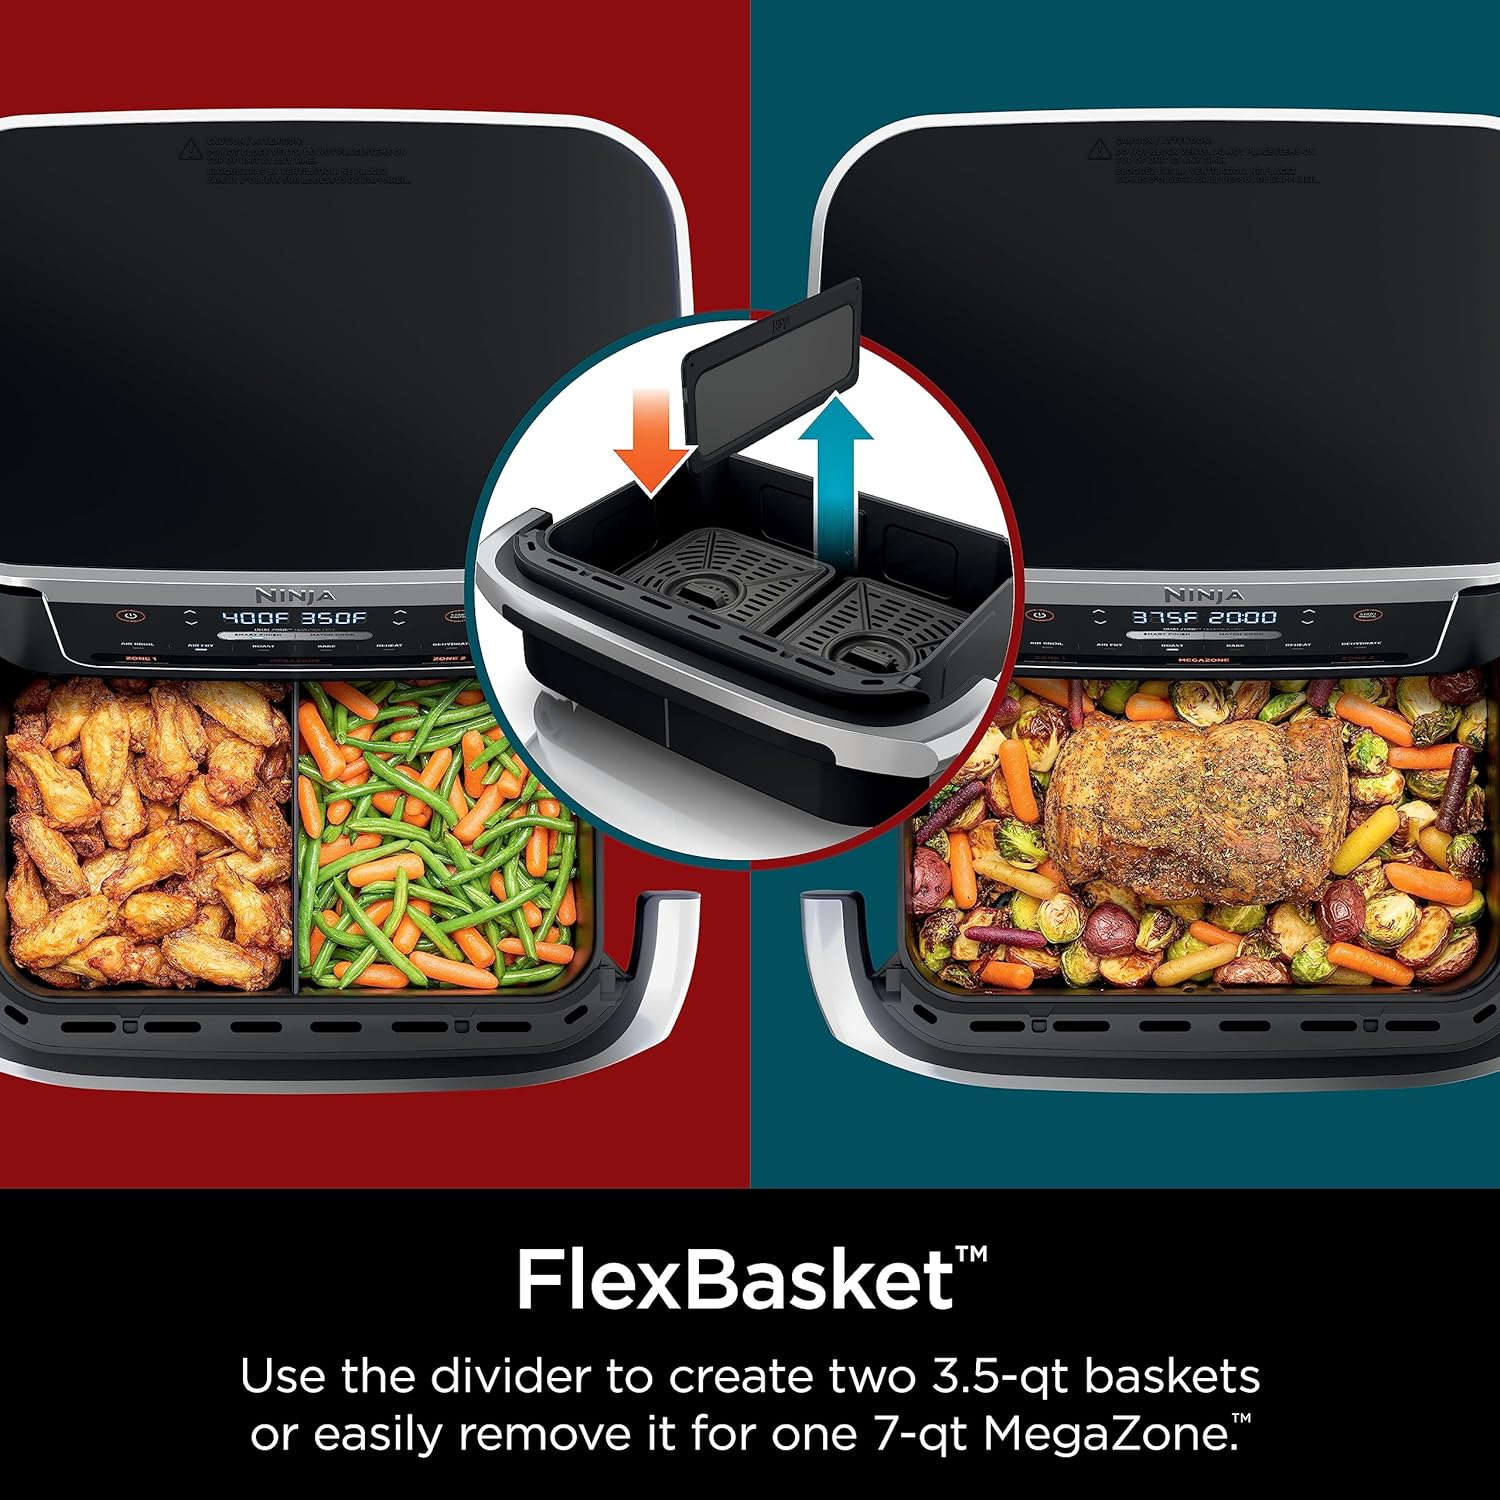 Ninja DZ071 Foodi 6-in-1 DualZone FlexBasket Air Fryer with 7-QT MegaZone  Basket Divider, Large Proteins  Full Meals, Smart Finish Cook 2 Foods 2 Ways, Large Capacity, Air Fry, Bake  More, Black